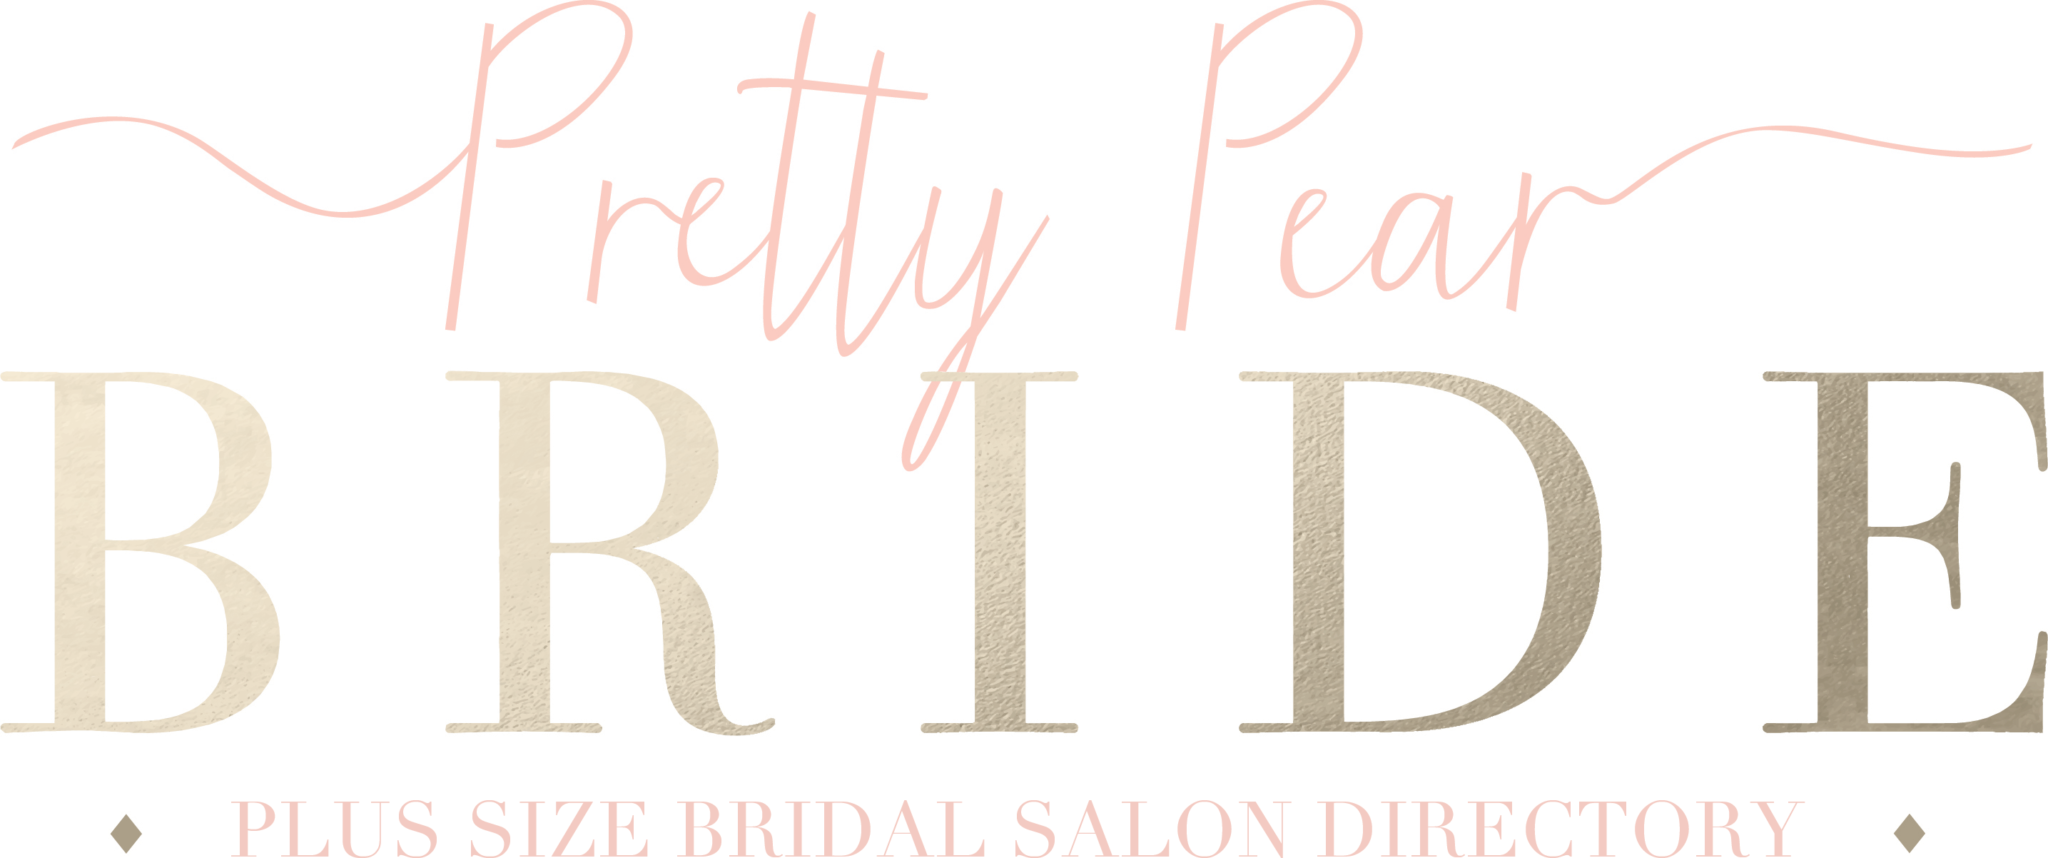 Pretty Pear Bride Bridal Salon Directory - Plus Size Bridal Directory